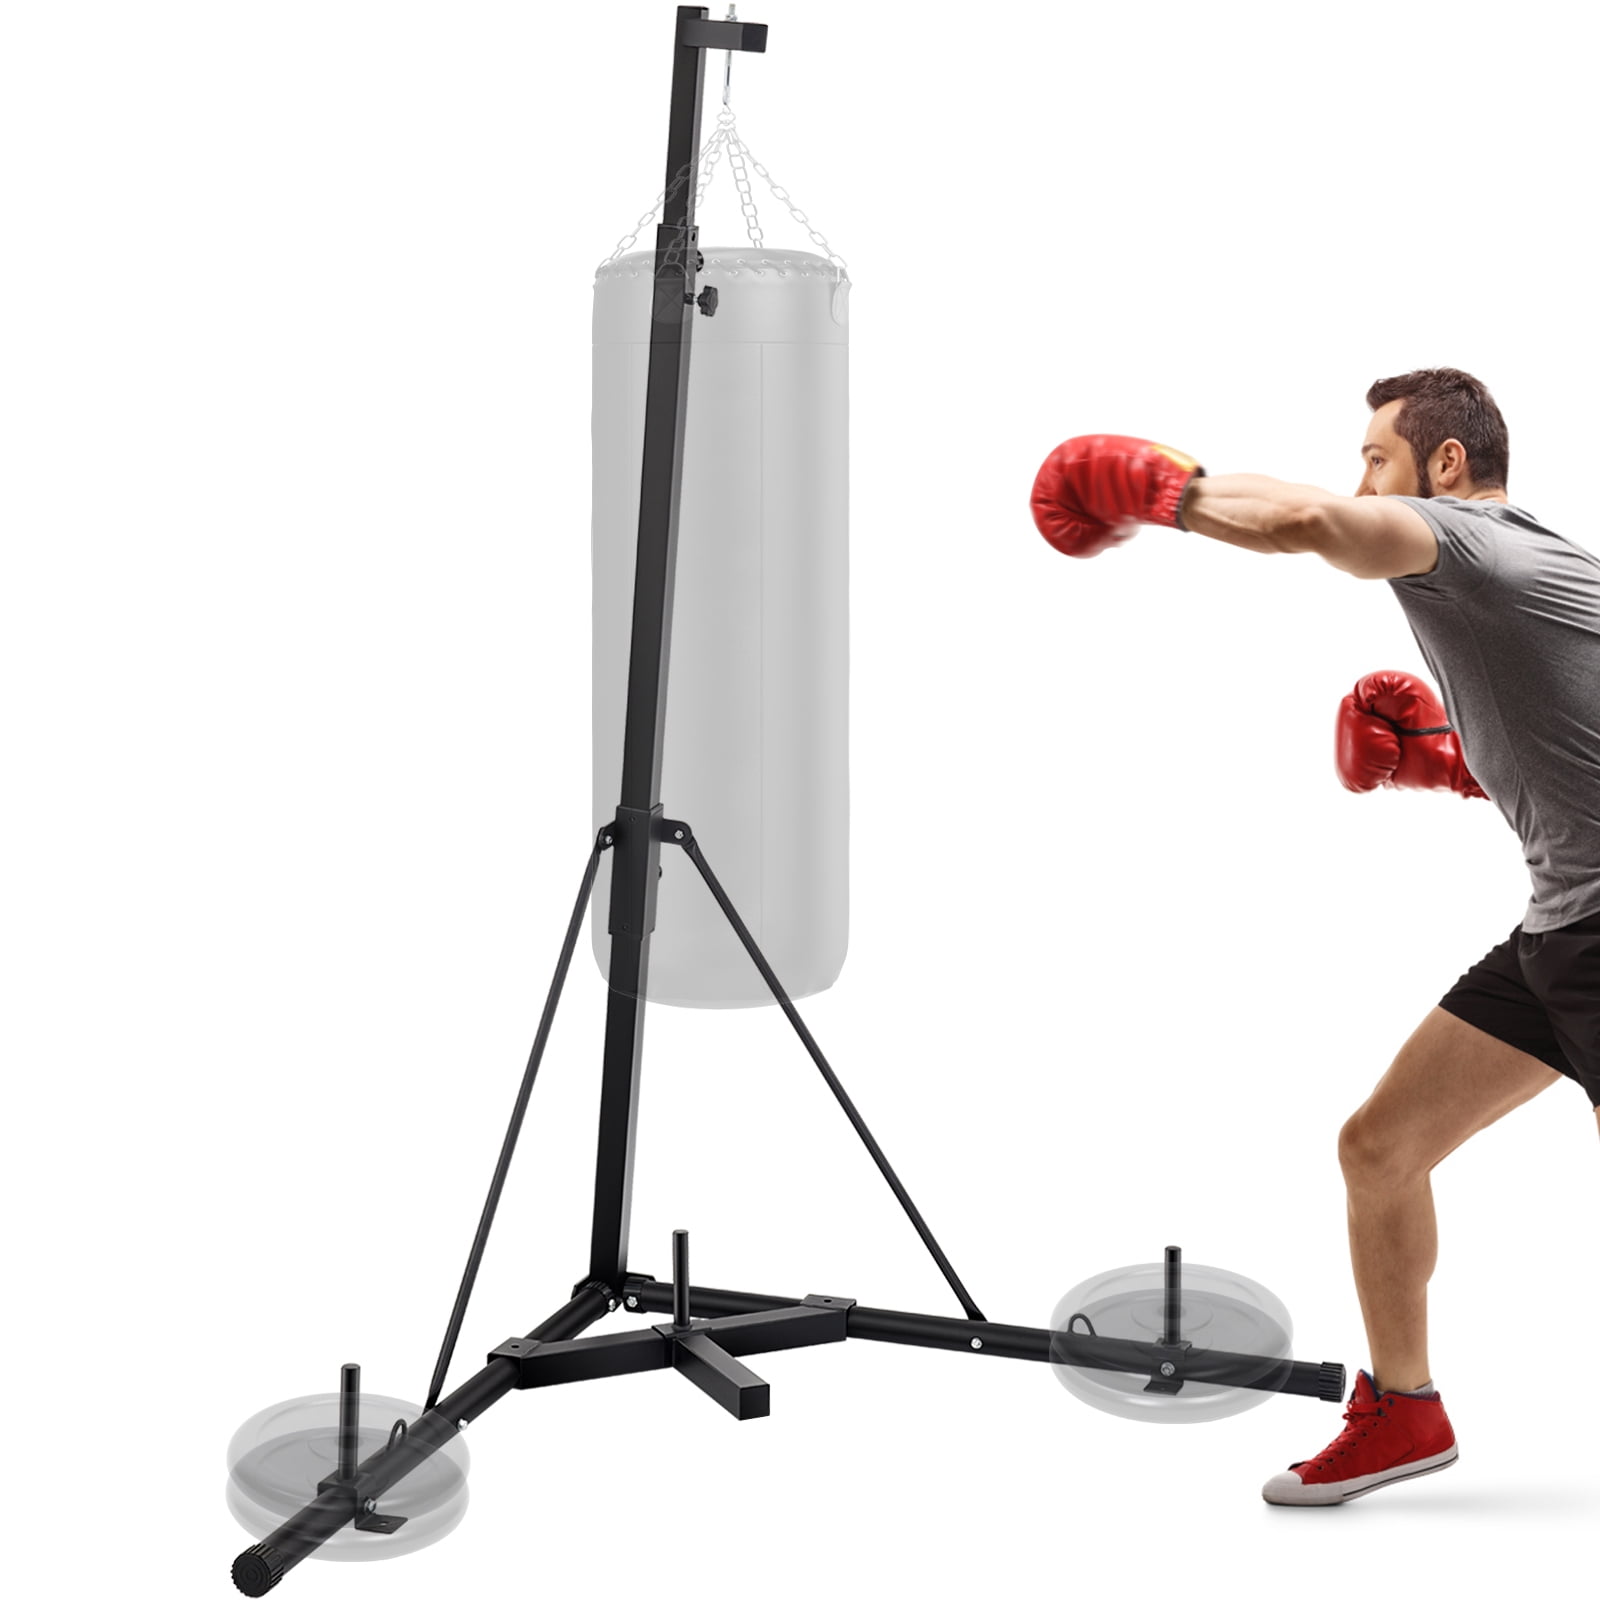 39 inch Boxing Punching Bag Unfilled MMA Training Bag Workout Sandbags UK Stock 